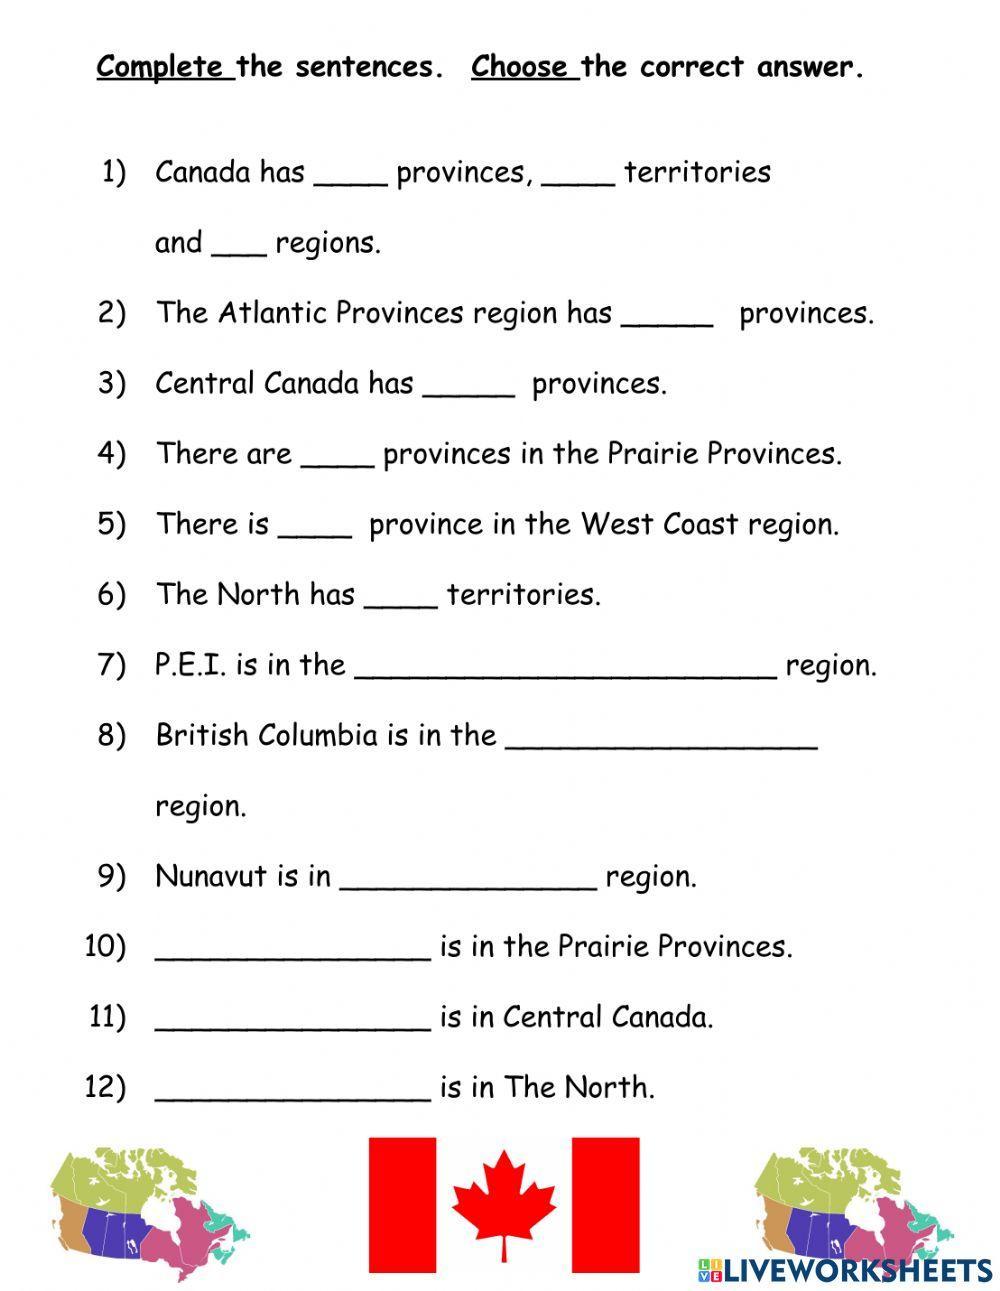 Regions of Canada 2